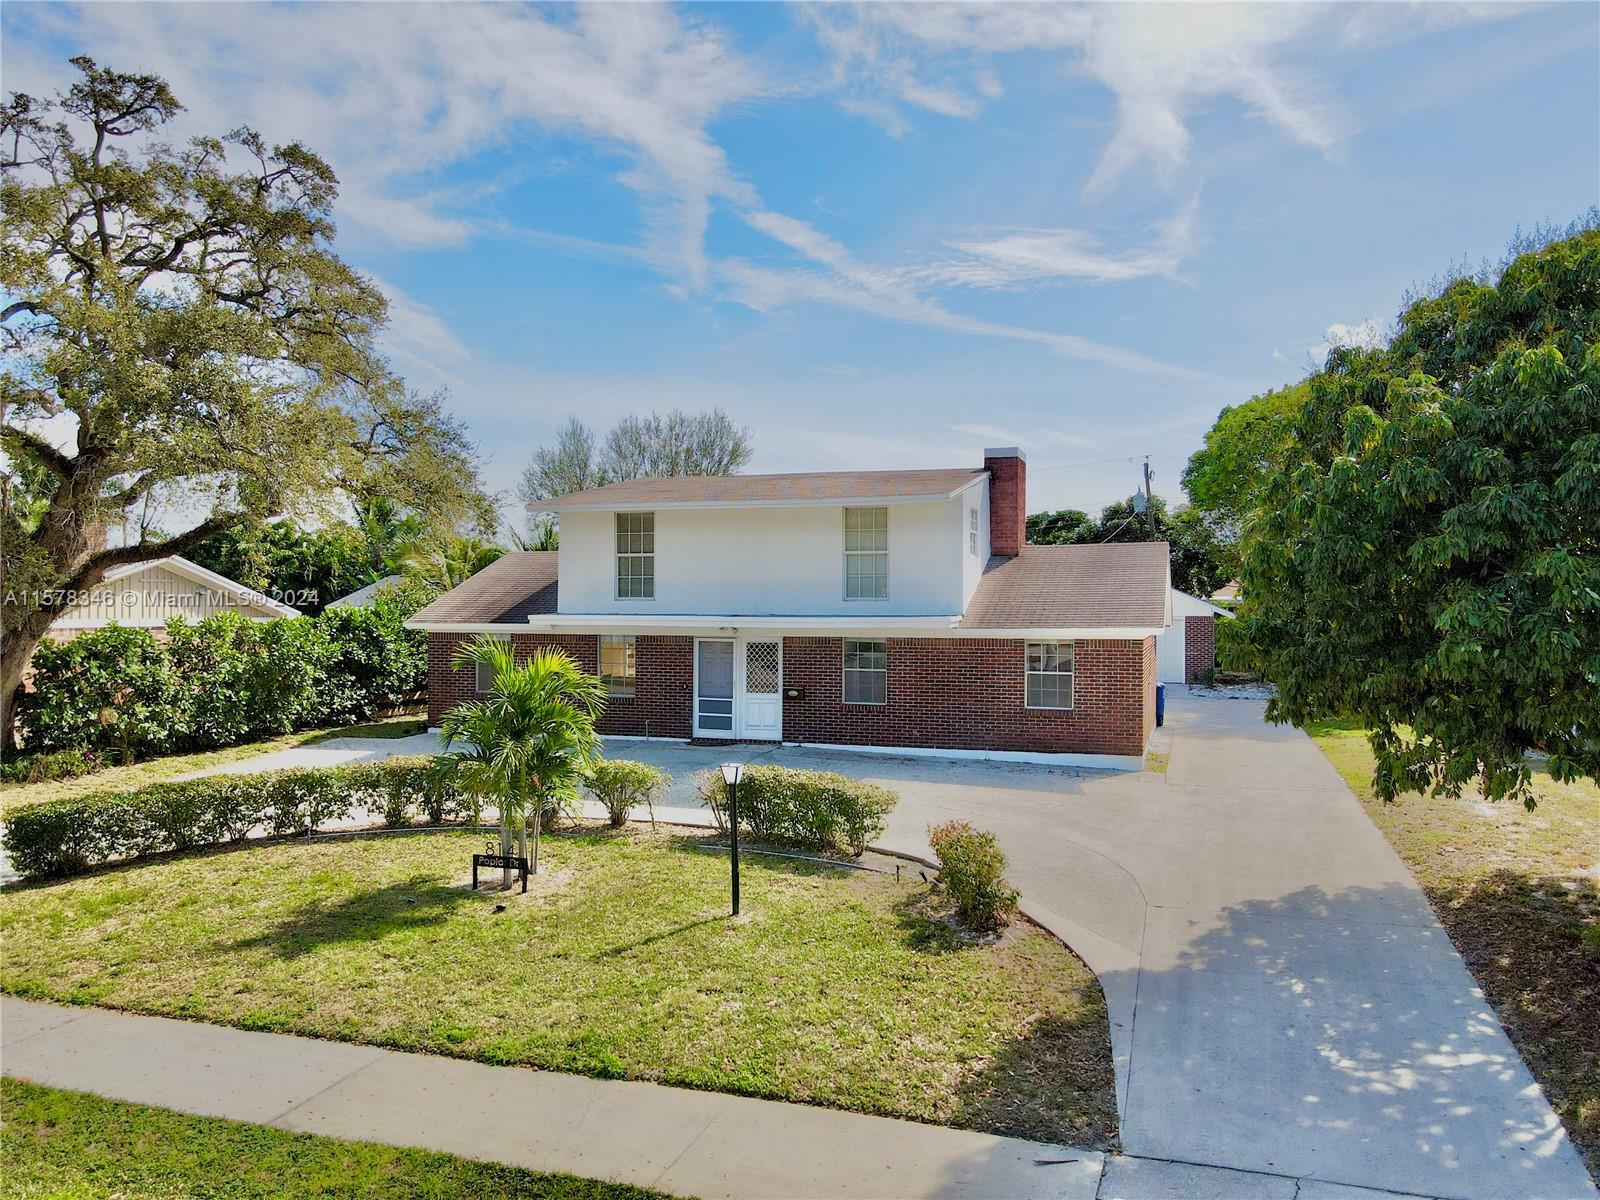 Rental Property at 814 Poplar Dr 1, Lake Park, Palm Beach County, Florida - Bedrooms: 3 
Bathrooms: 3  - $2,950 MO.